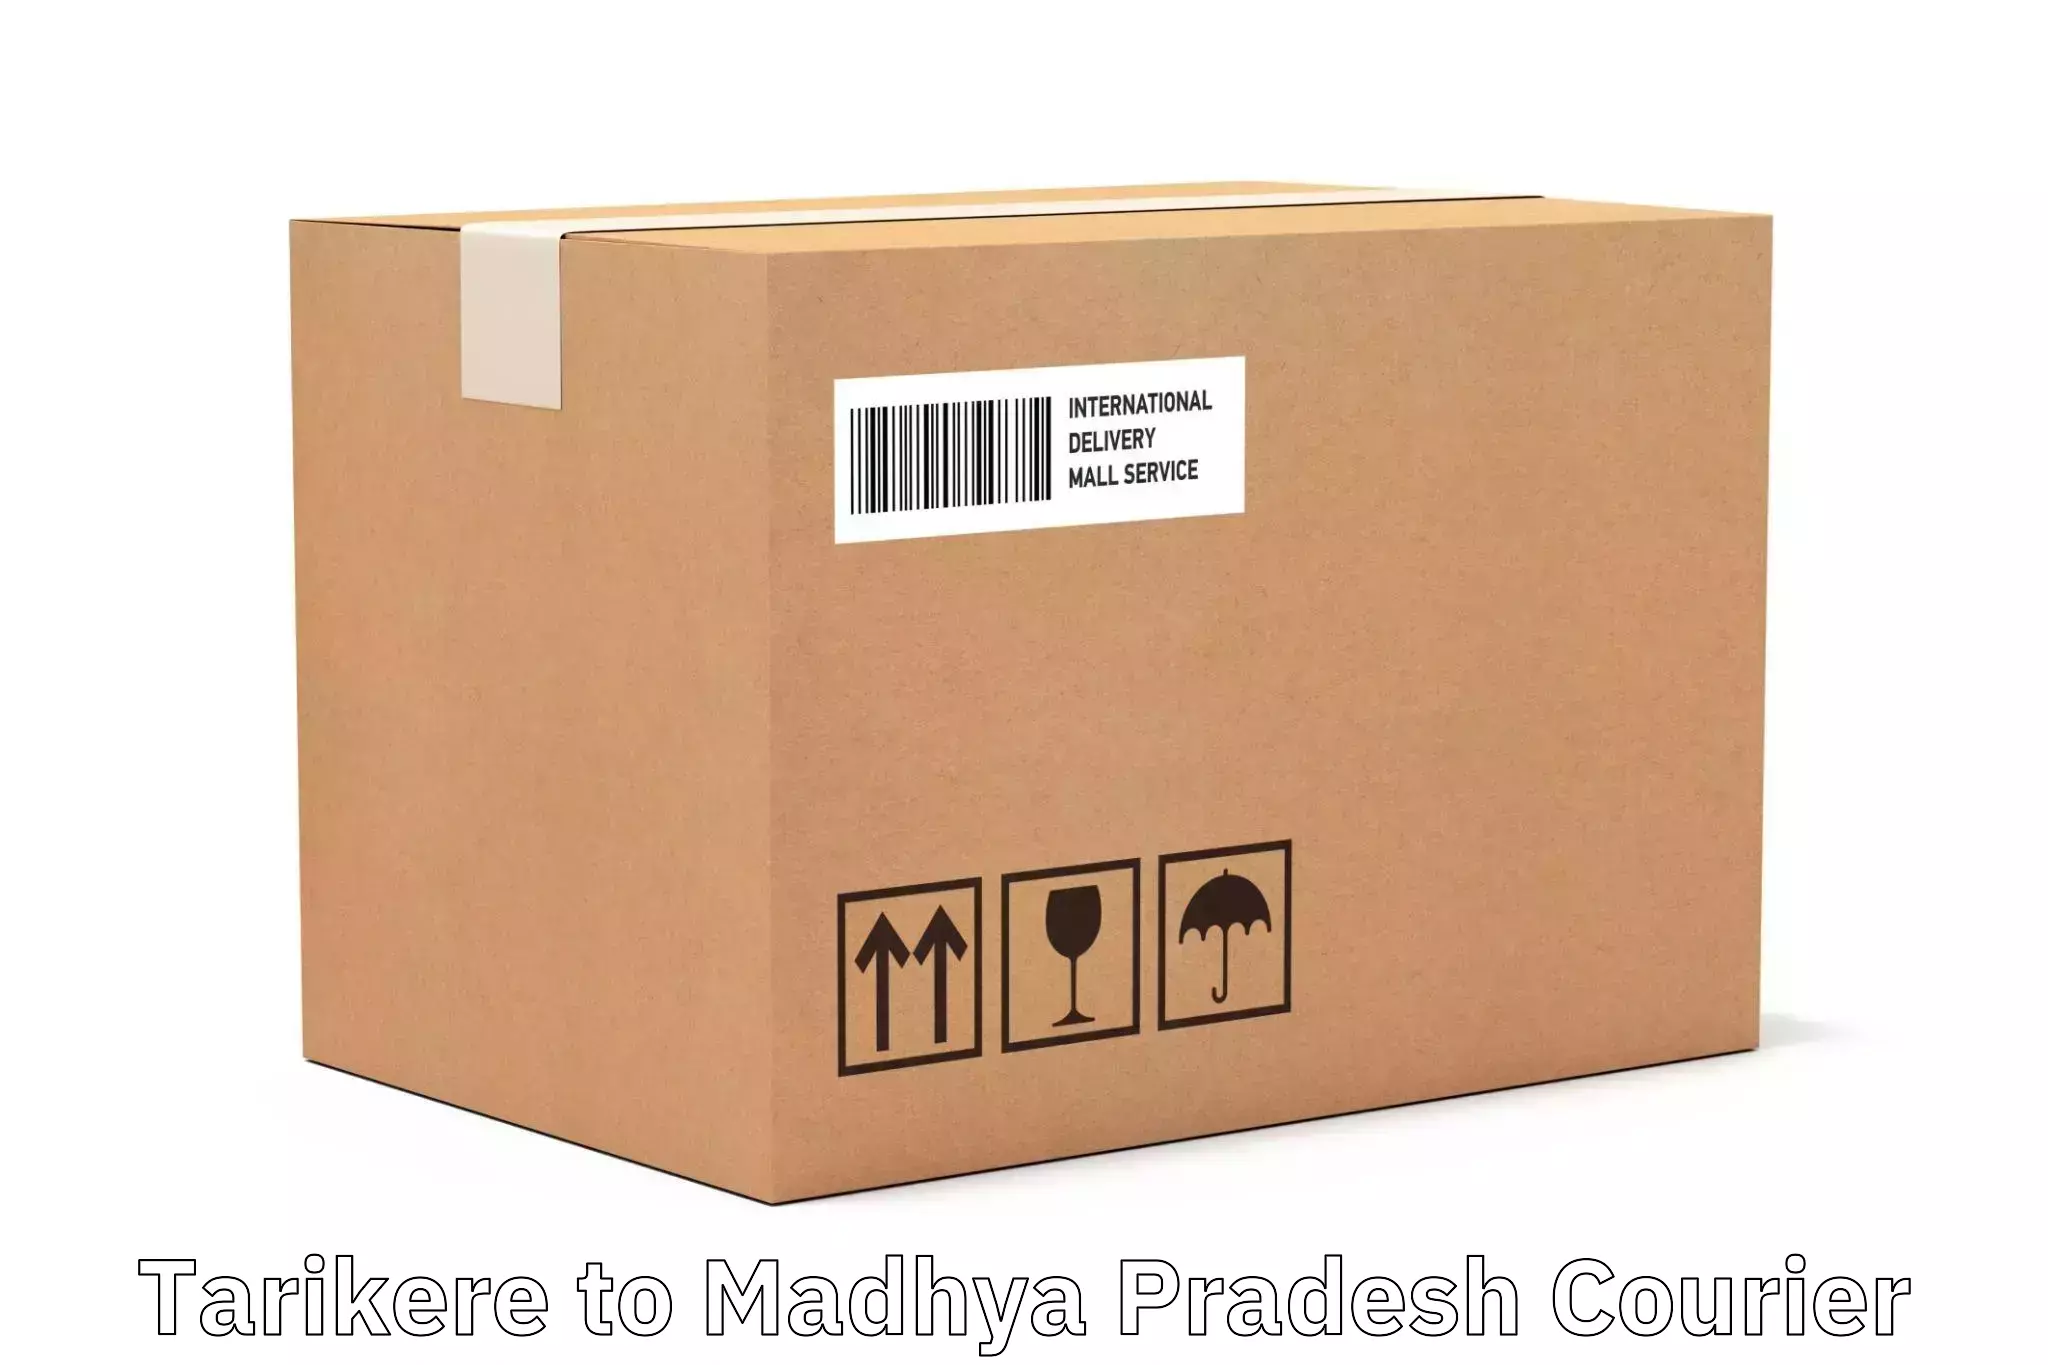 Full-service courier options Tarikere to Rajendragram